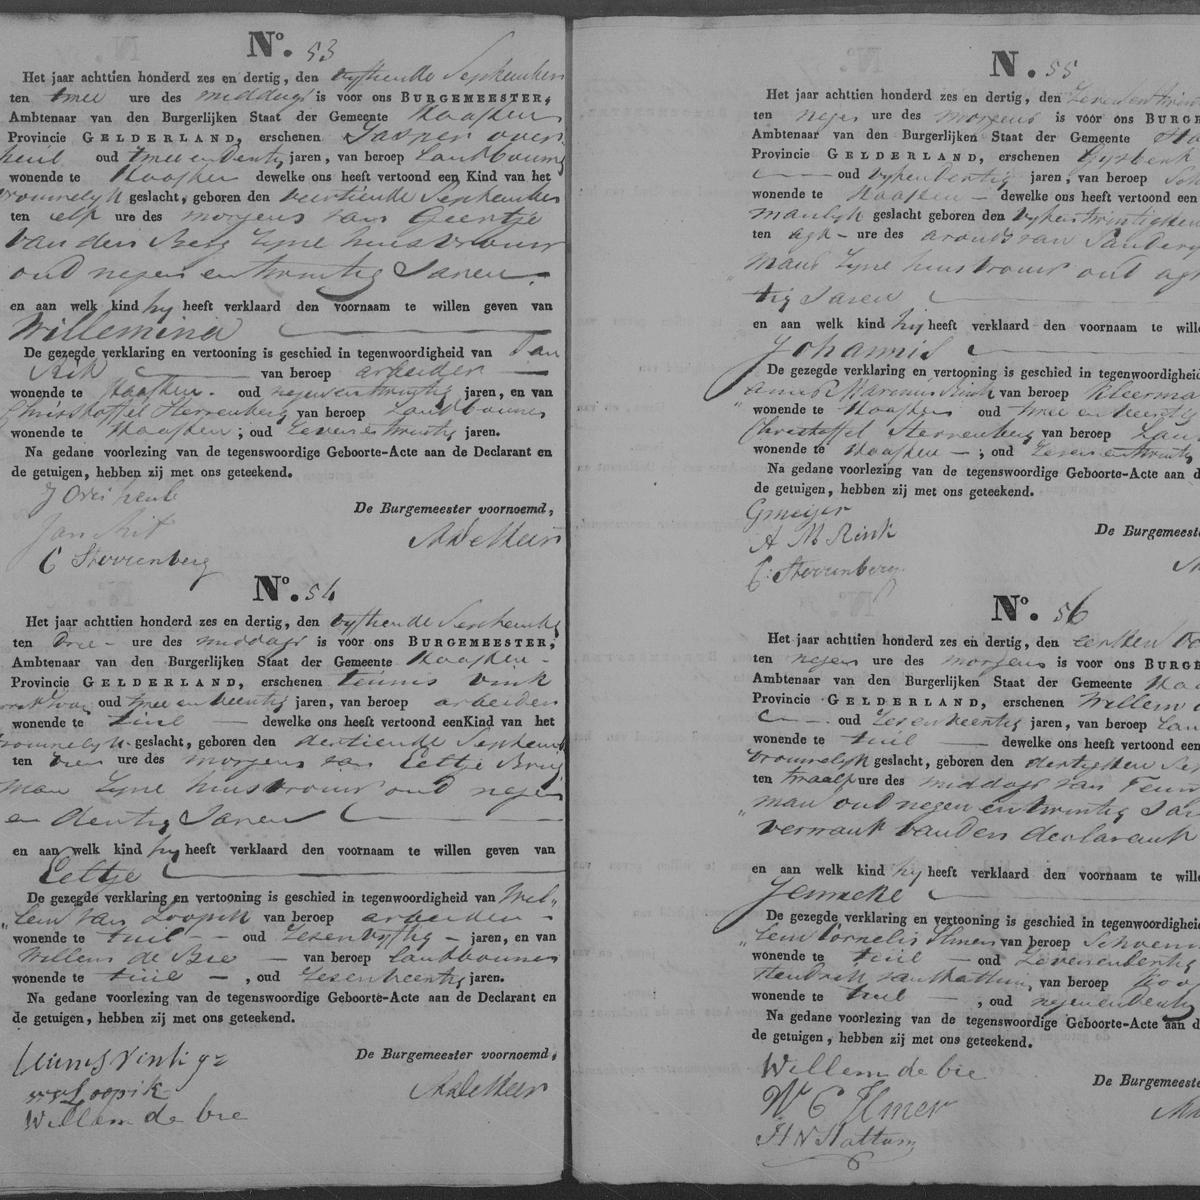 Civil registry of births, Haaften, 1836, records 53-56